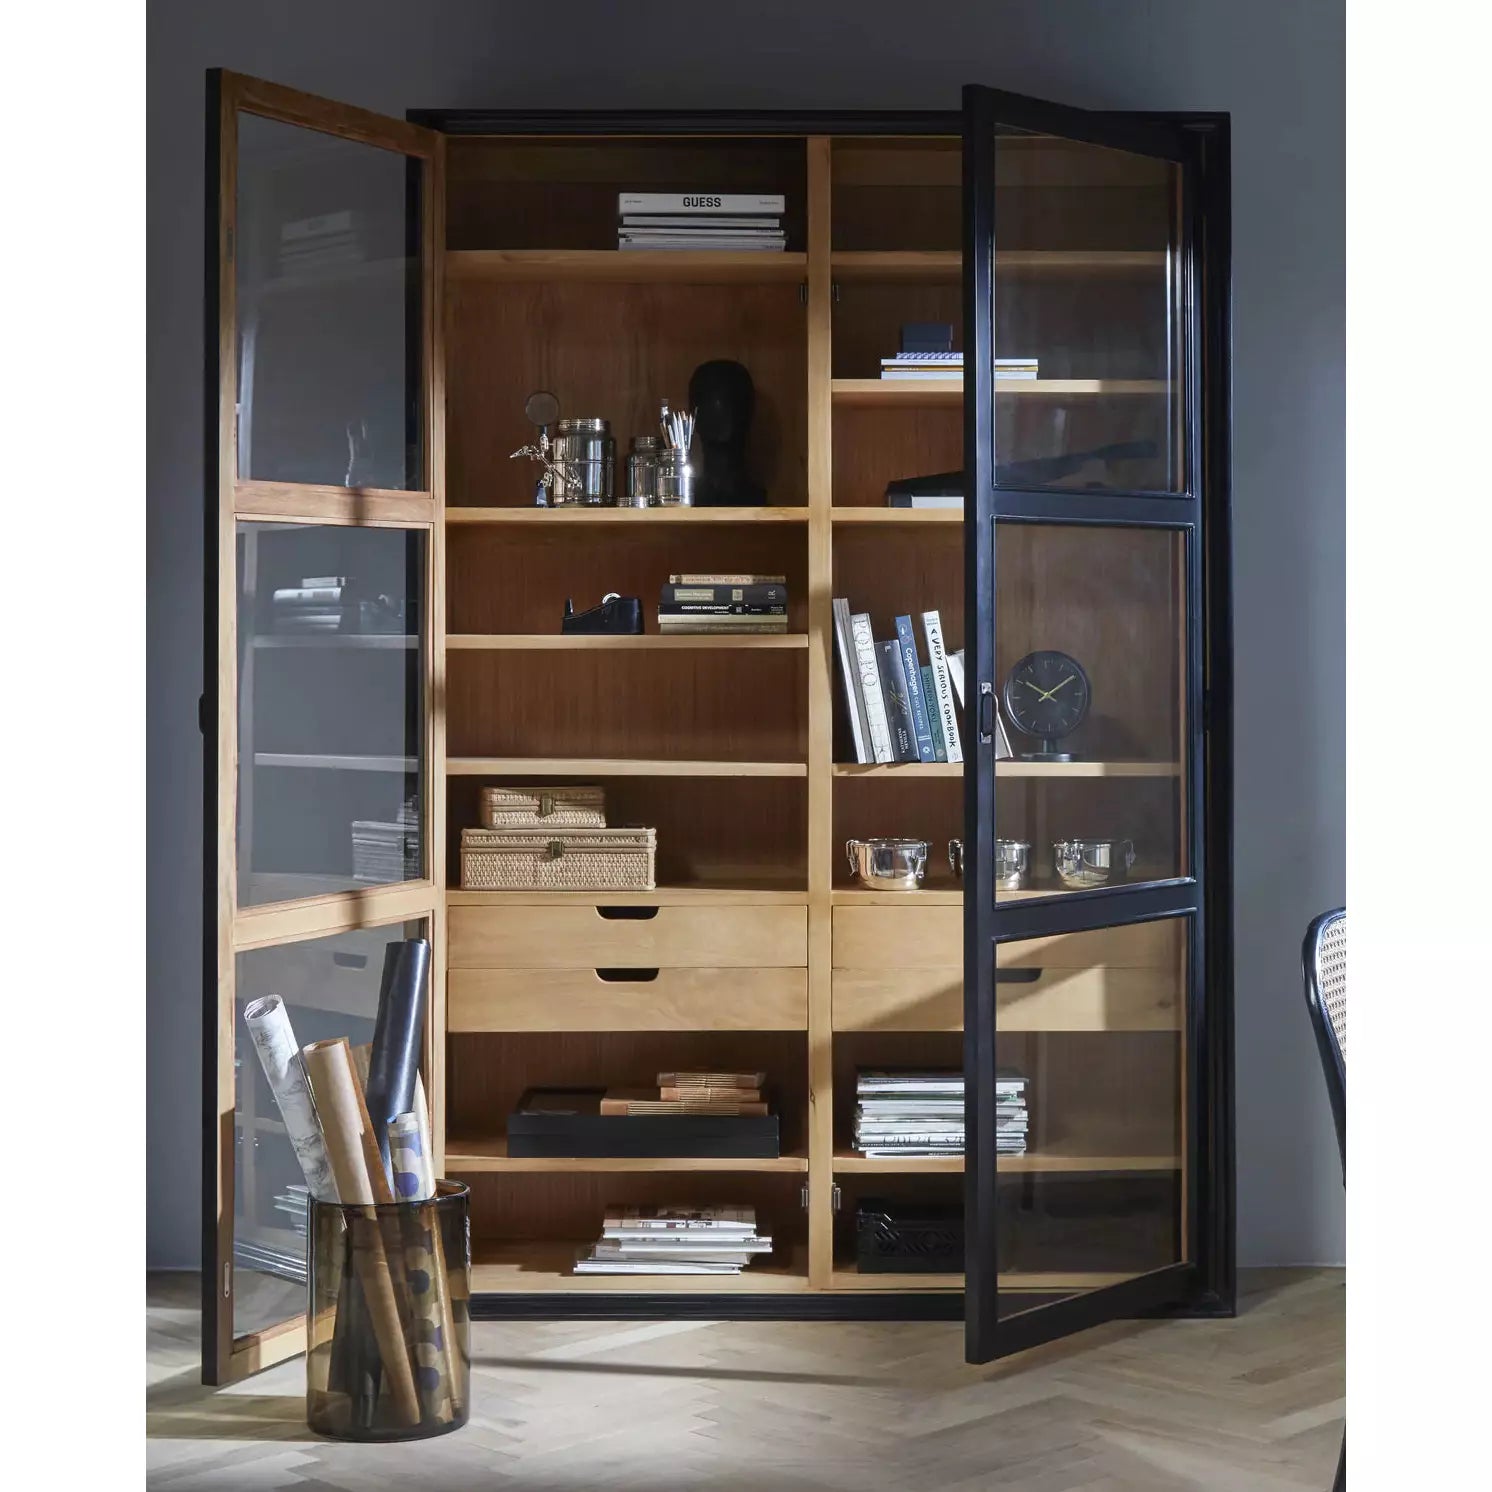 Viva Storage Cabinet Black With Glass Doors Drawers Mahogany Wood